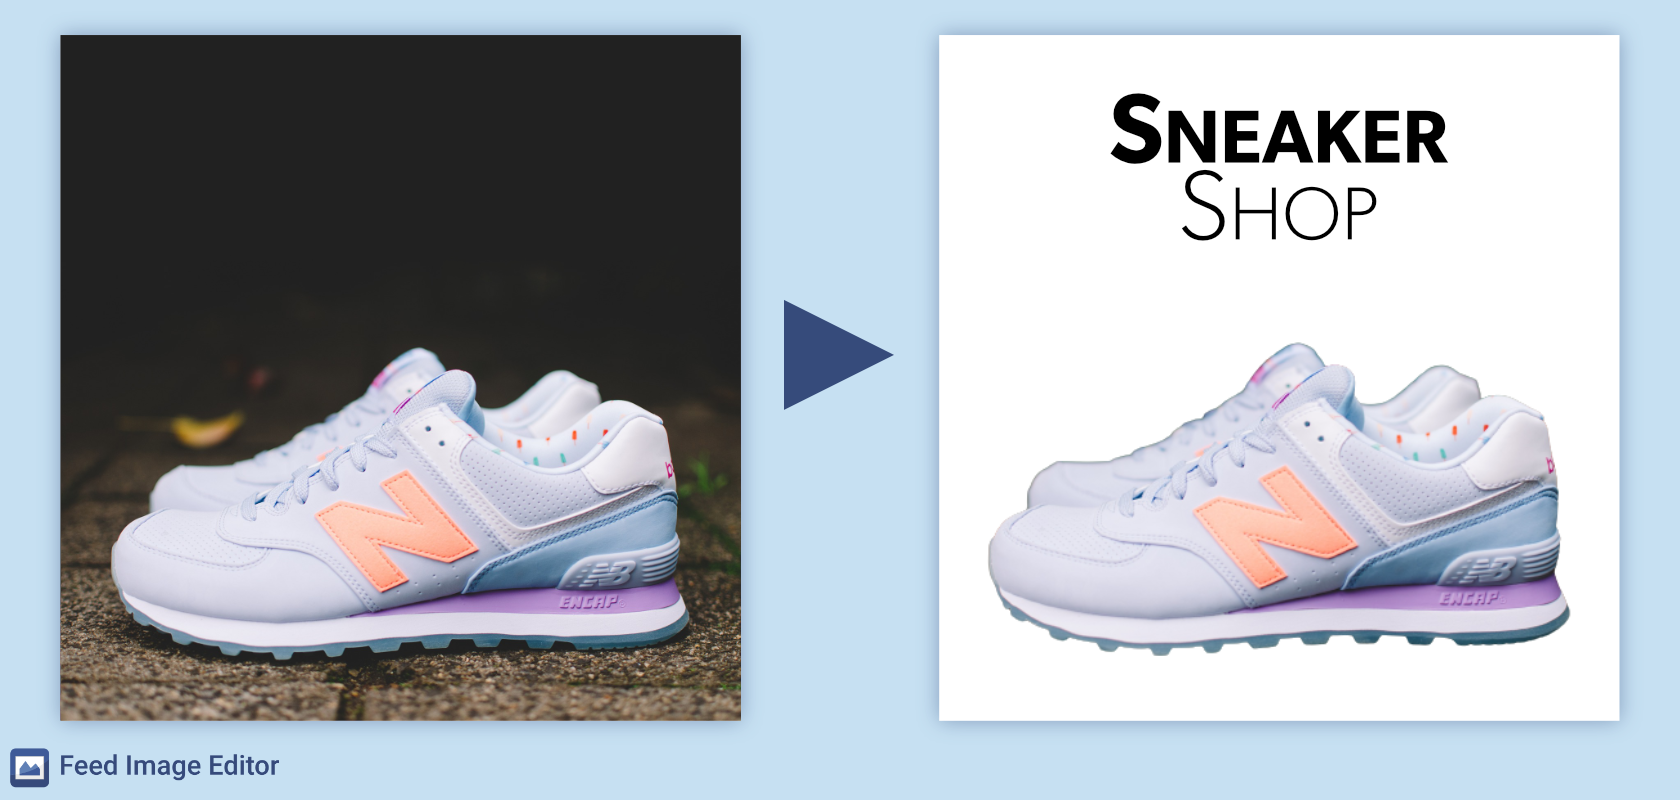 sneaker_shop_product_image_logo_brand